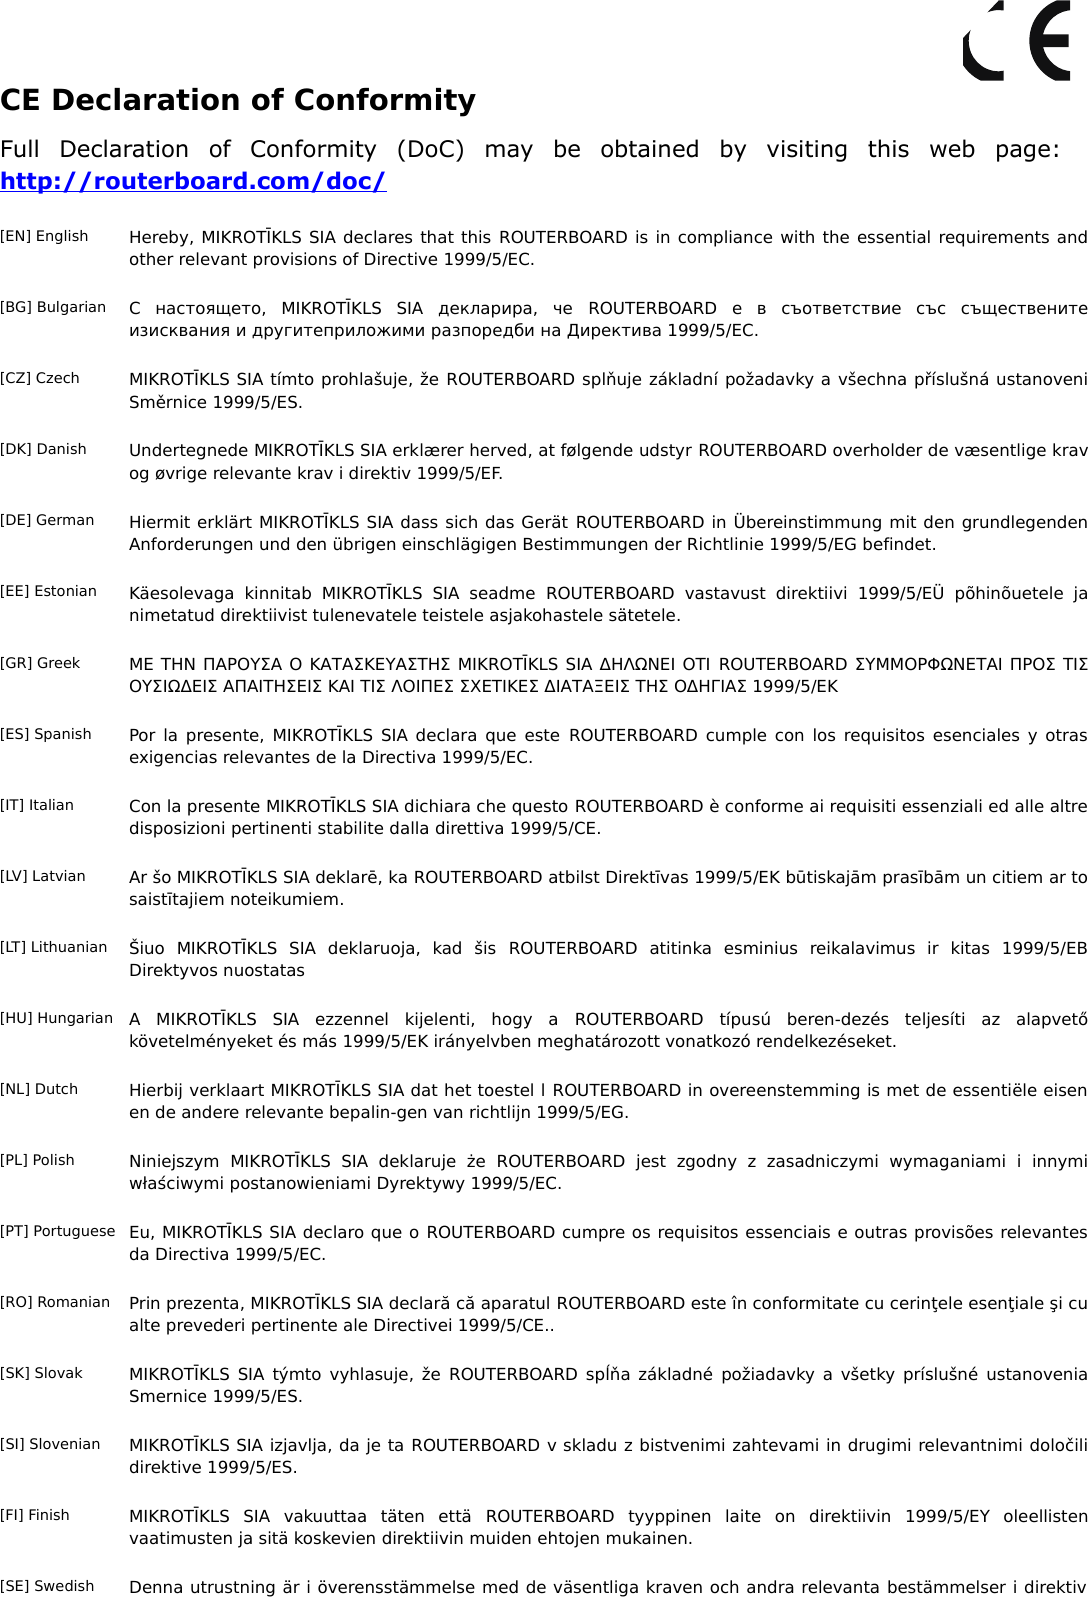 CE Declaration of ConformityFull   Declaration   of   Conformity   (DoC)   may   be   obtained   by   visiting   this   web   page: http://routerboard.com/doc/[EN] English Hereby, MIKROTĪKLS SIA declares that this ROUTERBOARD is in compliance with the essential requirements and other relevant provisions of Directive 1999/5/EC.[BG] Bulgarian С   настоящето,   MIKROTĪKLS   SIA   декларира,   че  ROUTERBOARD  е   в   съответствие   със   съществените изисквания и другитеприложими разпоредби на Директива 1999/5/EC.[CZ] Czech MIKROTĪKLS SIA tímto prohlašuje, že ROUTERBOARD splňuje základní požadavky a všechna příslušná ustanoveni Směrnice 1999/5/ES.[DK] Danish Undertegnede MIKROTĪKLS SIA erklærer herved, at følgende udstyr ROUTERBOARD overholder de væsentlige krav og øvrige relevante krav i direktiv 1999/5/EF.[DE] German Hiermit erklärt MIKROTĪKLS SIA dass sich das Gerät ROUTERBOARD in Übereinstimmung mit den grundlegenden Anforderungen und den übrigen einschlägigen Bestimmungen der Richtlinie 1999/5/EG befindet.[EE] Estonian Käesolevaga  kinnitab   MIKROTĪKLS  SIA  seadme  ROUTERBOARD  vastavust   direktiivi  1999/5/EÜ   põhinõuetele   ja nimetatud direktiivist tulenevatele teistele asjakohastele sätetele.[GR] Greek ΜΕ ΤΗΝ ΠΑΡΟΥΣΑ Ο ΚΑΤΑΣΚΕΥΑΣΤΗΣ MIKROTĪKLS SIA ΔΗΛΩΝΕΙ ΟΤΙ ROUTERBOARD ΣΥΜΜΟΡΦΩΝΕΤΑΙ ΠΡΟΣ ΤΙΣ ΟΥΣΙΩΔΕΙΣ ΑΠΑΙΤΗΣΕΙΣ ΚΑΙ ΤΙΣ ΛΟΙΠΕΣ ΣΧΕΤΙΚΕΣ ΔΙΑΤΑΞΕΙΣ ΤΗΣ ΟΔΗΓΙΑΣ 1999/5/ΕΚ[ES] Spanish Por la presente, MIKROTĪKLS SIA declara que este  ROUTERBOARD cumple con los requisitos esenciales y otras exigencias relevantes de la Directiva 1999/5/EC.[IT] Italian Con la presente MIKROTĪKLS SIA dichiara che questo ROUTERBOARD è conforme ai requisiti essenziali ed alle altre disposizioni pertinenti stabilite dalla direttiva 1999/5/CE.[LV] Latvian Ar šo MIKROTĪKLS SIA deklarē, ka ROUTERBOARD atbilst Direktīvas 1999/5/EK būtiskajām prasībām un citiem ar to saistītajiem noteikumiem.[LT] Lithuanian Šiuo   MIKROTĪKLS   SIA   deklaruoja,   kad   šis  ROUTERBOARD  atitinka   esminius   reikalavimus   ir   kitas   1999/5/EB Direktyvos nuostatas[HU] Hungarian A   MIKROTĪKLS   SIA   ezzennel   kijelenti,   hogy   a  ROUTERBOARD  típusú   beren-dezés   teljesíti   az   alapvető követelményeket és más 1999/5/EK irányelvben meghatározott vonatkozó rendelkezéseket.[NL] Dutch Hierbij verklaart MIKROTĪKLS SIA dat het toestel l ROUTERBOARD in overeenstemming is met de essentiële eisen en de andere relevante bepalin-gen van richtlijn 1999/5/EG.[PL] Polish Niniejszym   MIKROTĪKLS   SIA   deklaruje  że  ROUTERBOARD  jest   zgodny   z   zasadniczymi   wymaganiami   i   innymi właściwymi postanowieniami Dyrektywy 1999/5/EC.[PT] Portuguese Eu, MIKROTĪKLS SIA declaro que o ROUTERBOARD cumpre os requisitos essenciais e outras provisões relevantes da Directiva 1999/5/EC.[RO] Romanian Prin prezenta, MIKROTĪKLS SIA declară că aparatul ROUTERBOARD este în conformitate cu cerinţele esenţiale şi cu alte prevederi pertinente ale Directivei 1999/5/CE..[SK] Slovak MIKROTĪKLS SIA týmto vyhlasuje, že  ROUTERBOARD  spĺňa základné požiadavky a všetky príslušné ustanovenia Smernice 1999/5/ES.[SI] Slovenian MIKROTĪKLS SIA izjavlja, da je ta ROUTERBOARD v skladu z bistvenimi zahtevami in drugimi relevantnimi določili direktive 1999/5/ES.[FI] Finish MIKROTĪKLS   SIA   vakuuttaa   täten   että  ROUTERBOARD  tyyppinen   laite   on   direktiivin   1999/5/EY   oleellisten vaatimusten ja sitä koskevien direktiivin muiden ehtojen mukainen.[SE] Swedish Denna utrustning är i överensstämmelse med de väsentliga kraven och andra relevanta bestämmelser i direktiv  